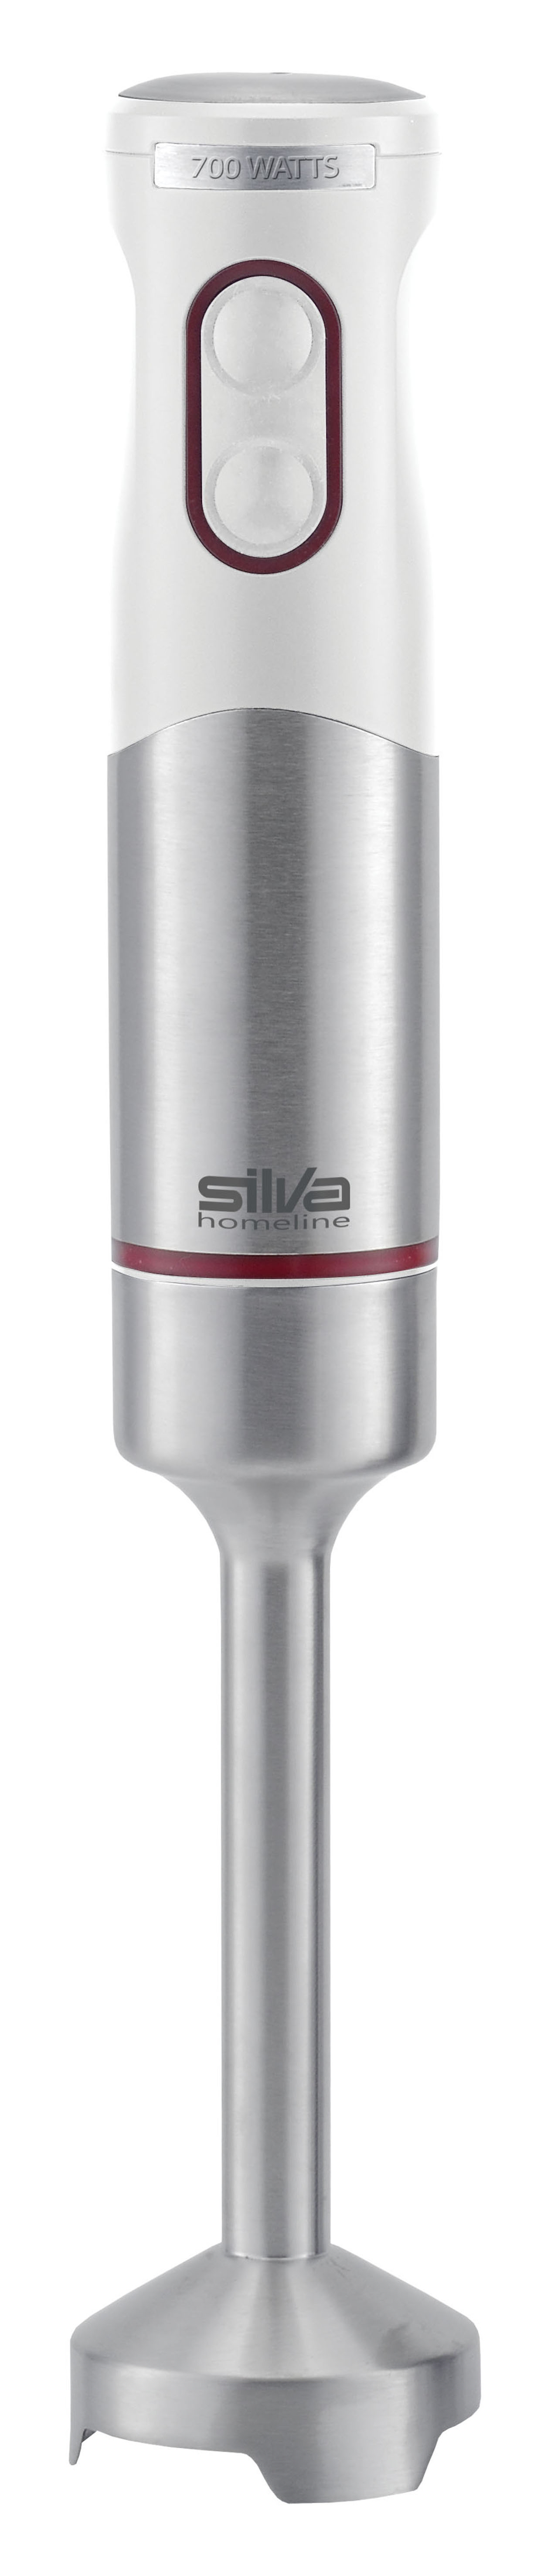 SILVA-HOMELINE SMS 6501 Stabmixer-Set Edelstahl/Weiß ml) Watt, 500 (700